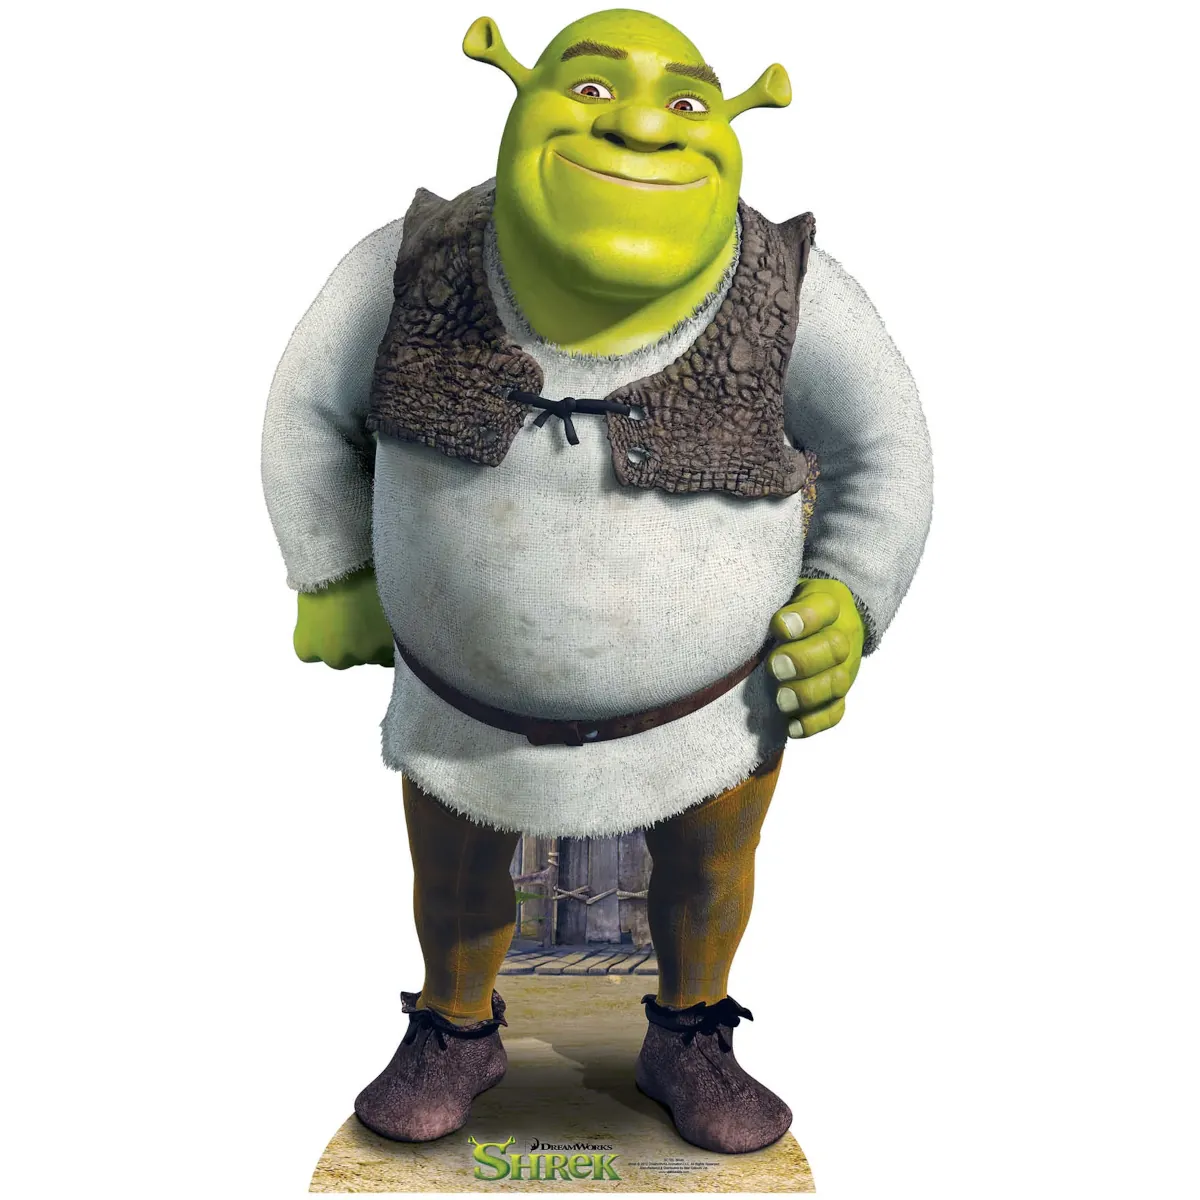 SC785 Shrek (DreamWorks Animation Shrek) Official Lifesize Cardboard Cutout Standee Front